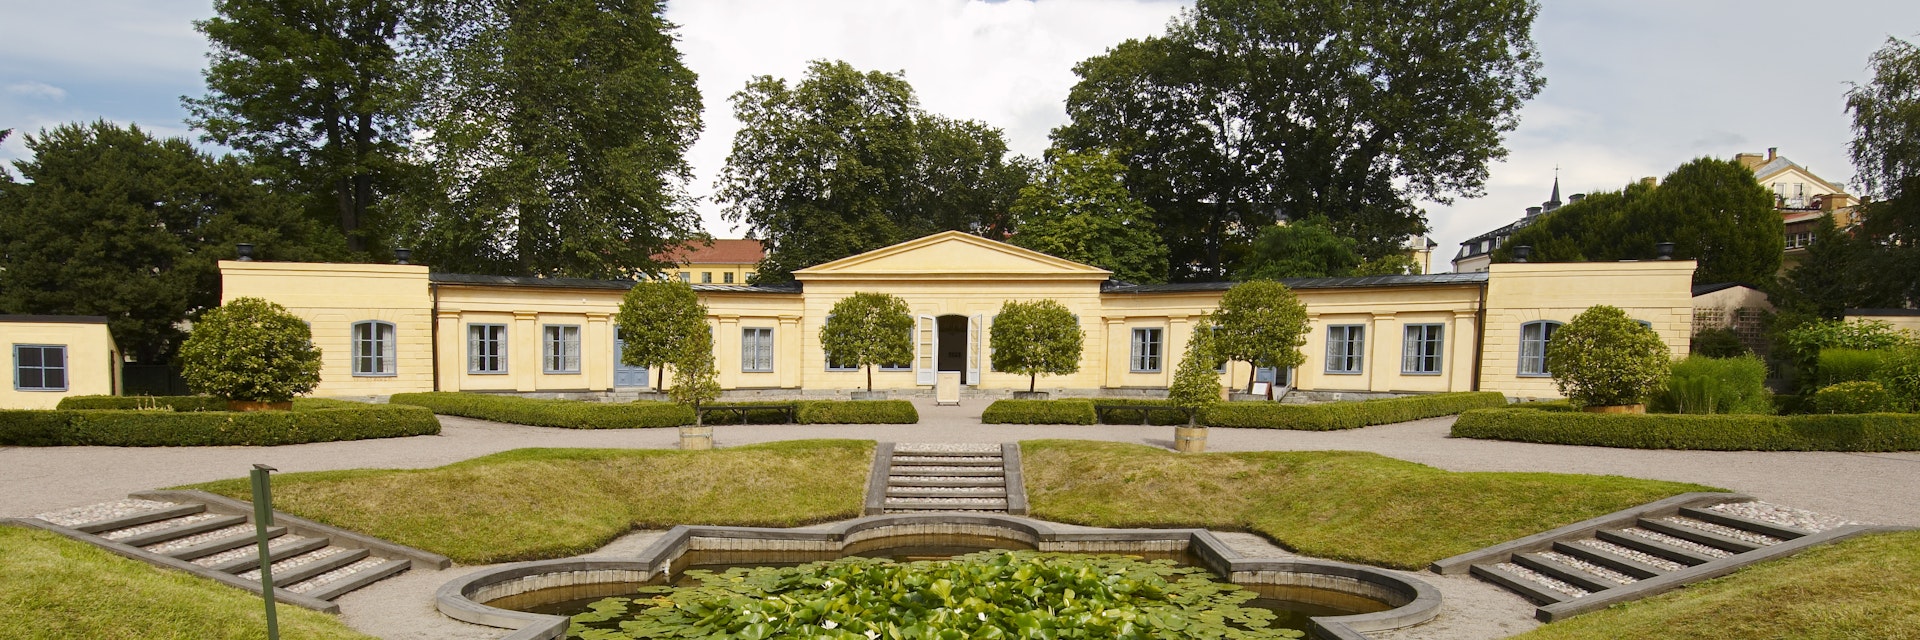 The Linnaeus Garden, Aquarium lacustre with orangery behind, Hammarby, Sweden